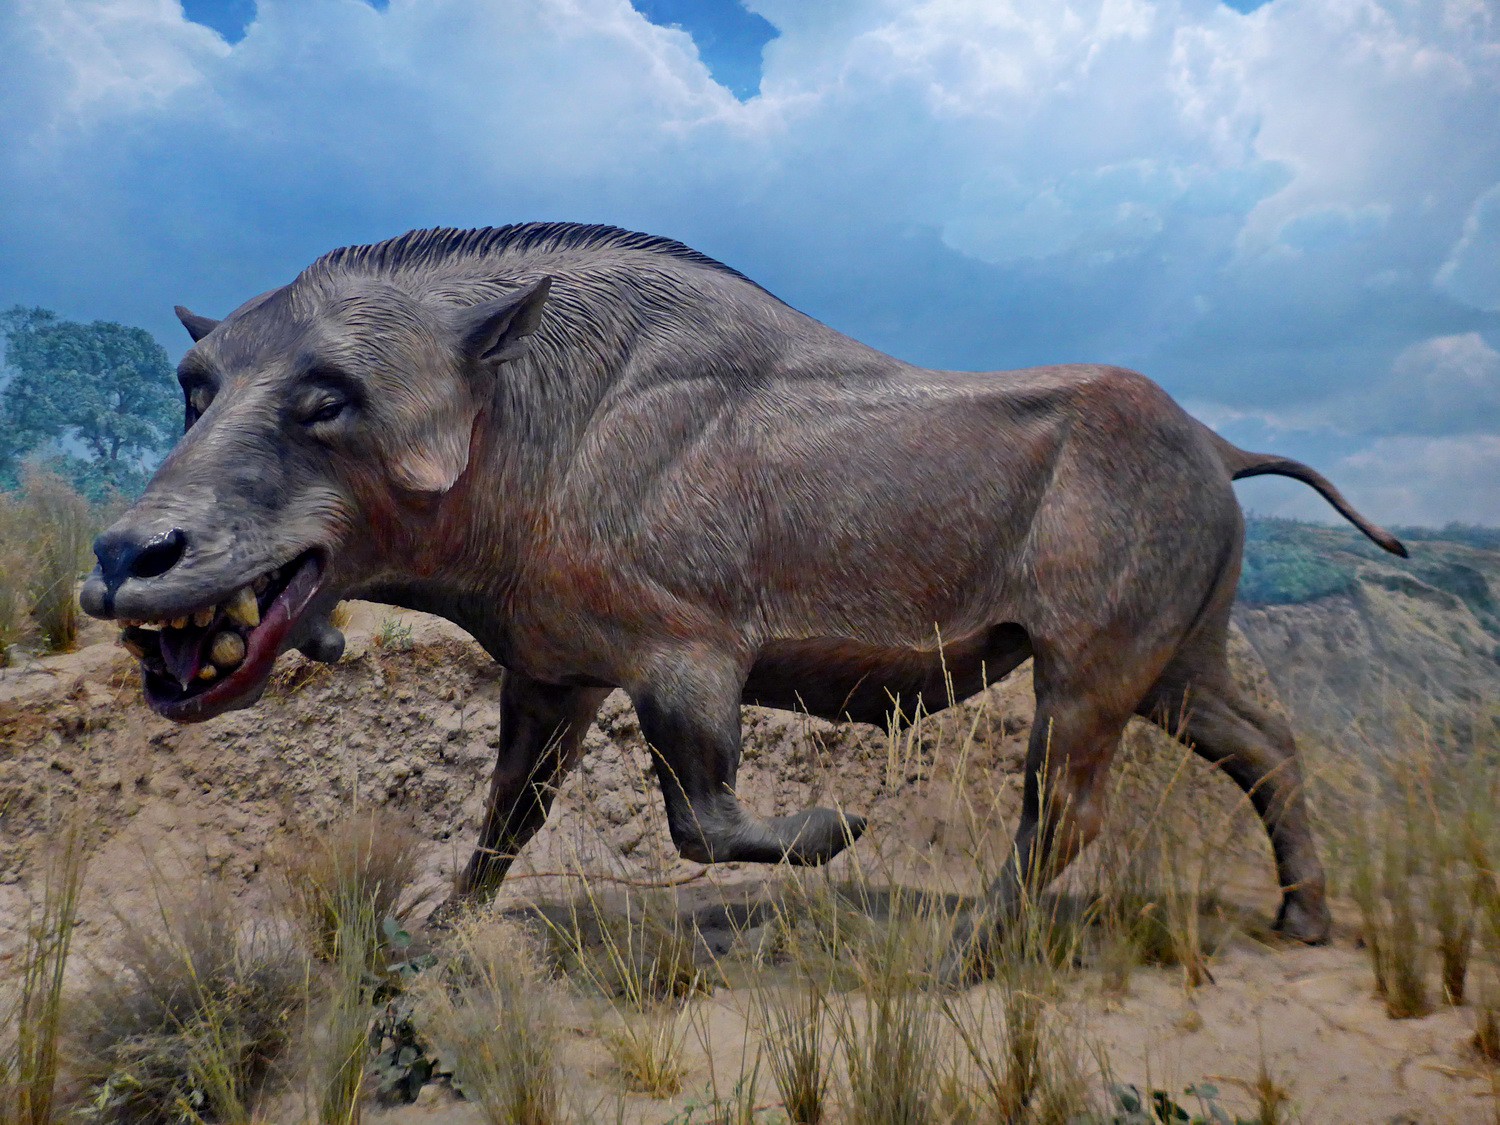 "Big Pig" in the Nebraska Woodlands, 20 million years ago